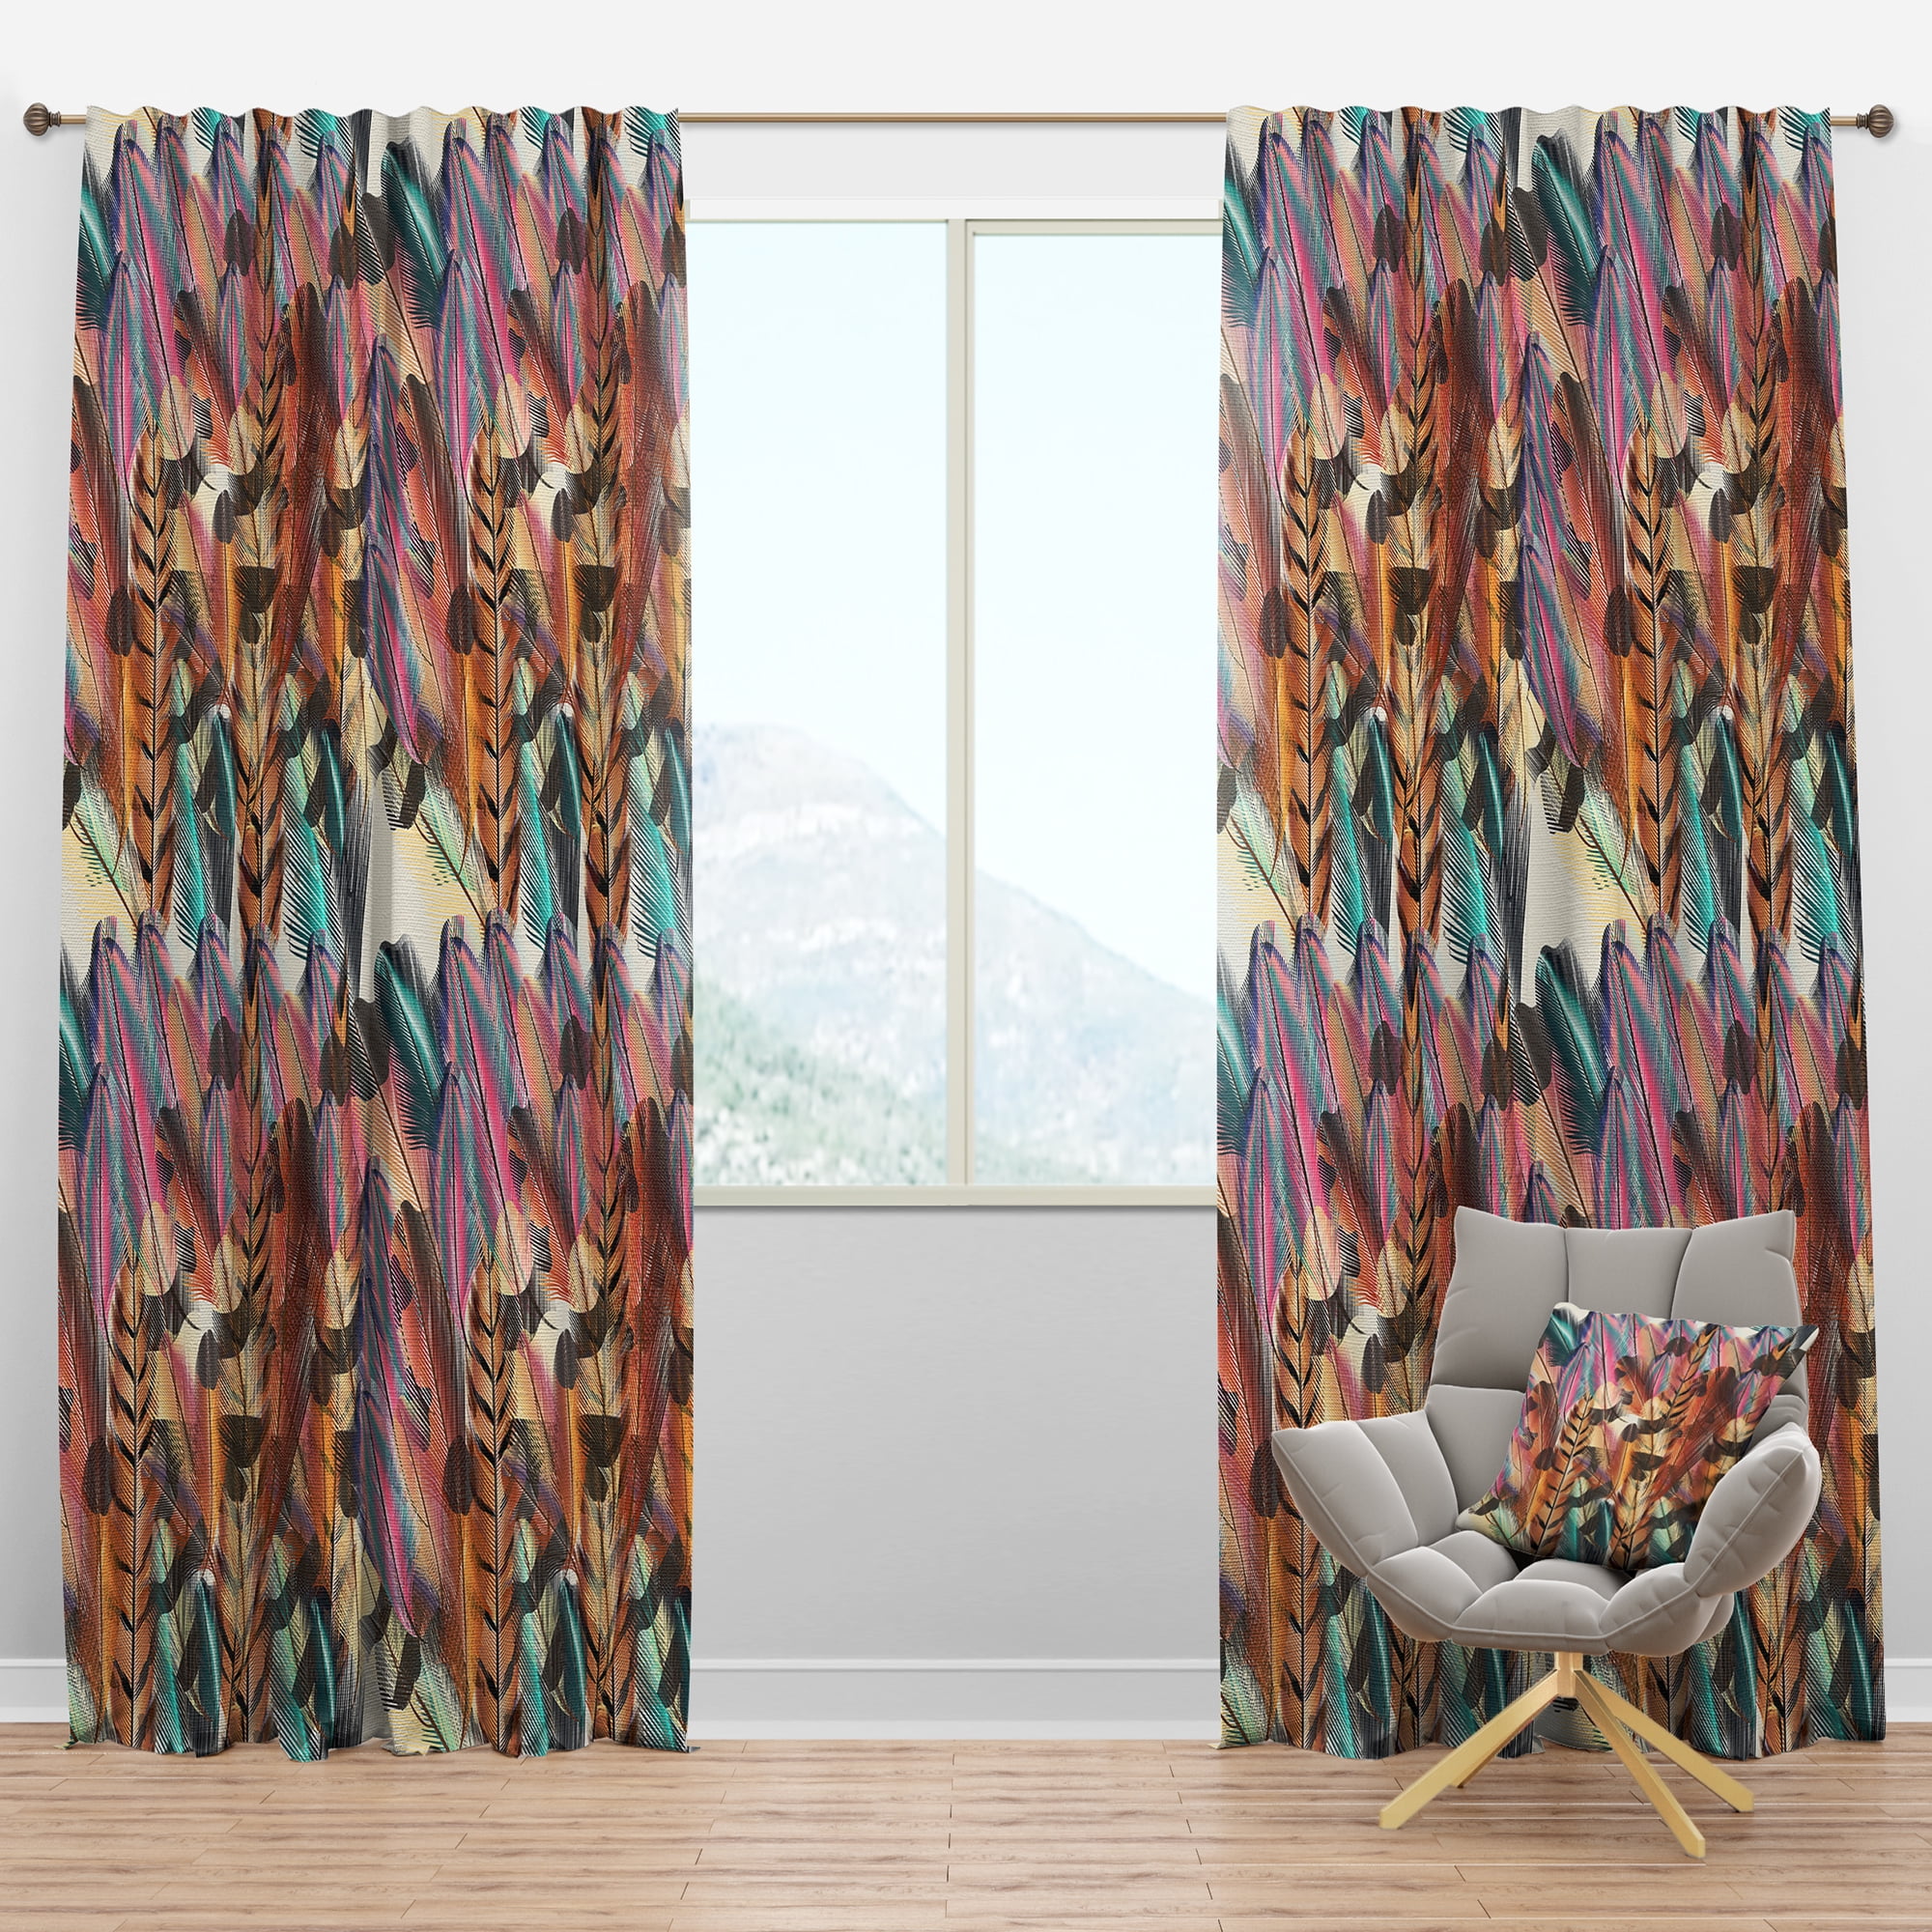 3D Blockout Curtain 2 Panels Set Drapes Fabric Window-Flower Bird Ancient56 